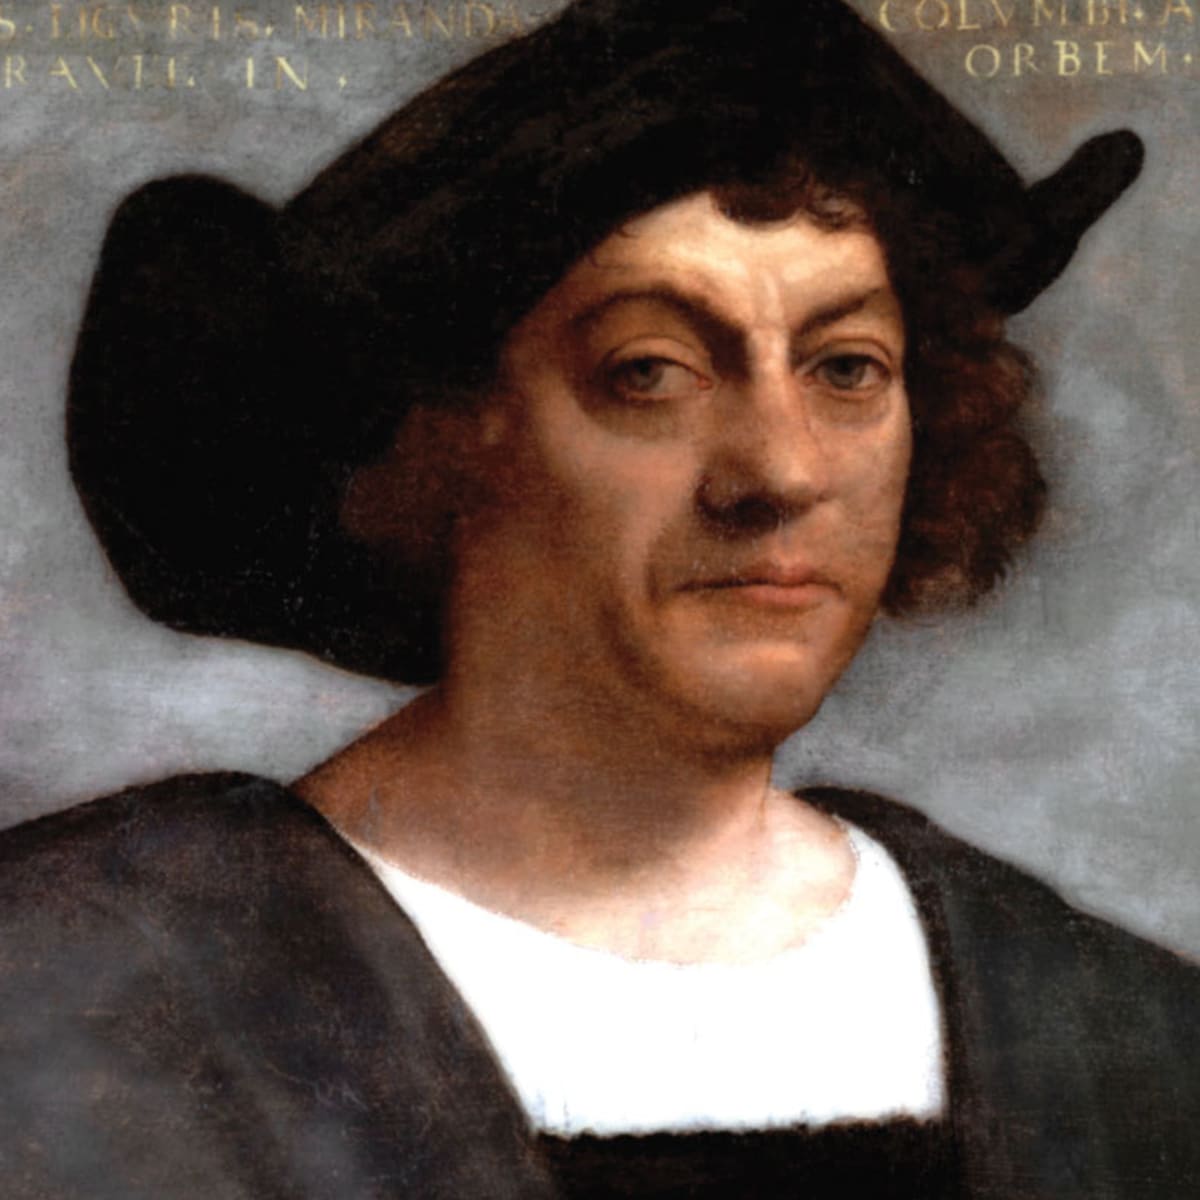 Christopher Columbus image.jpg